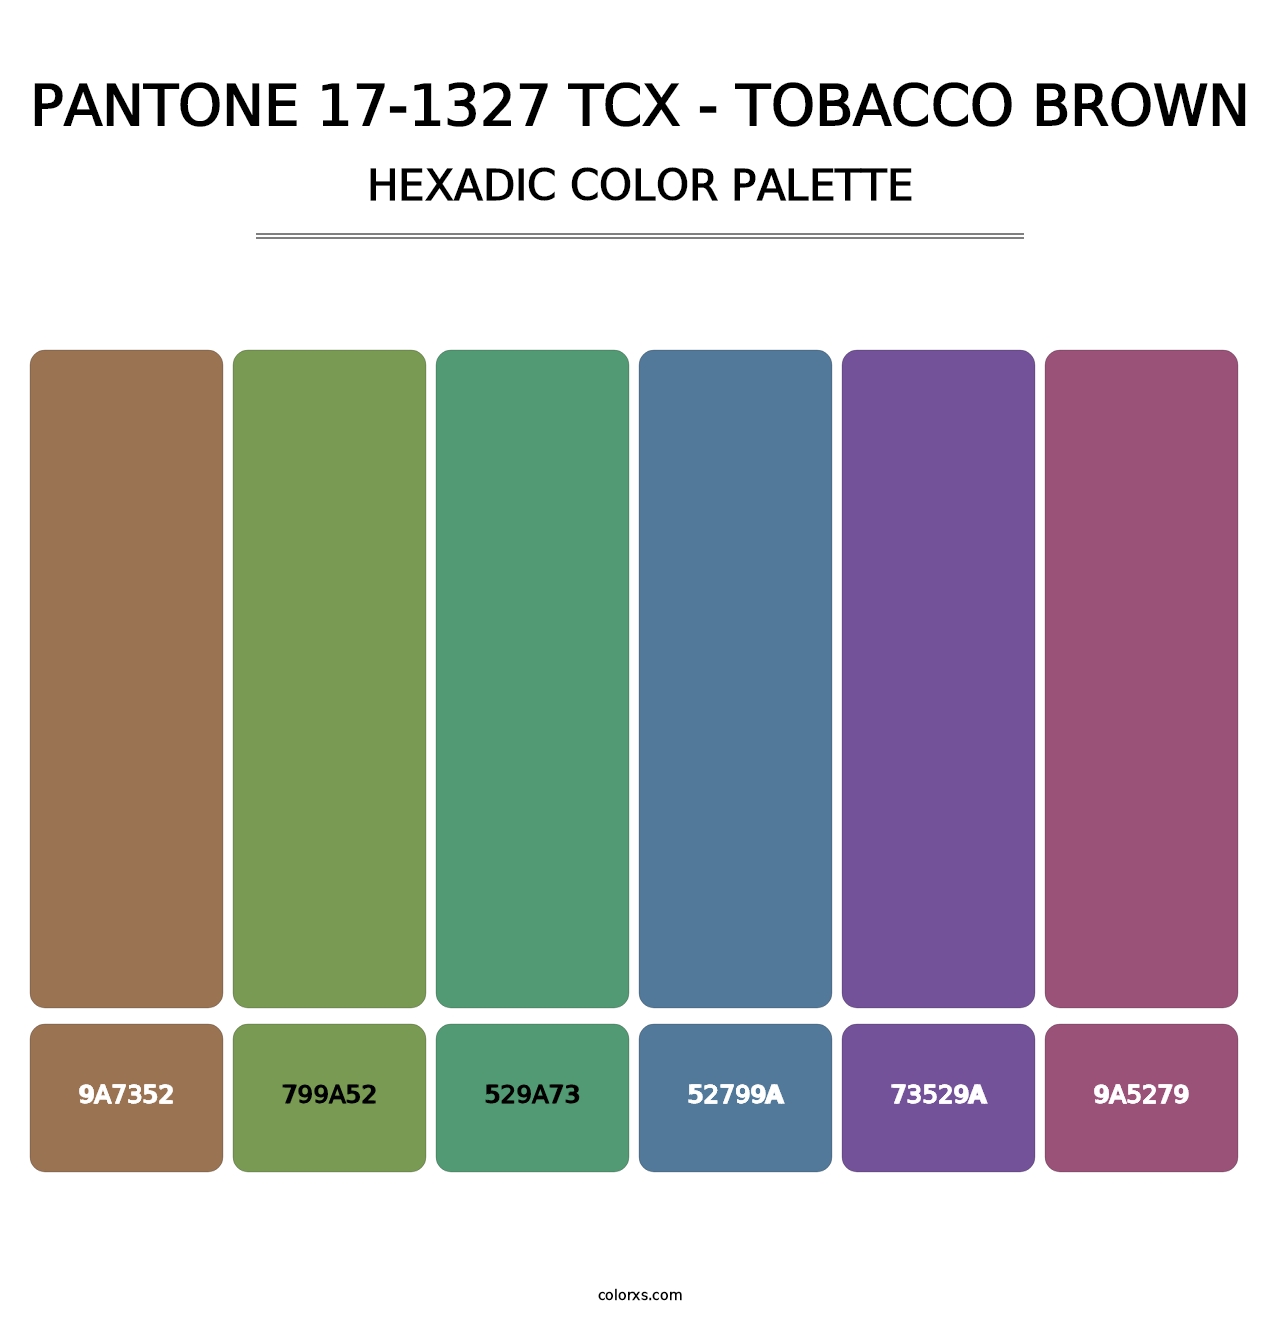 PANTONE 17-1327 TCX - Tobacco Brown - Hexadic Color Palette